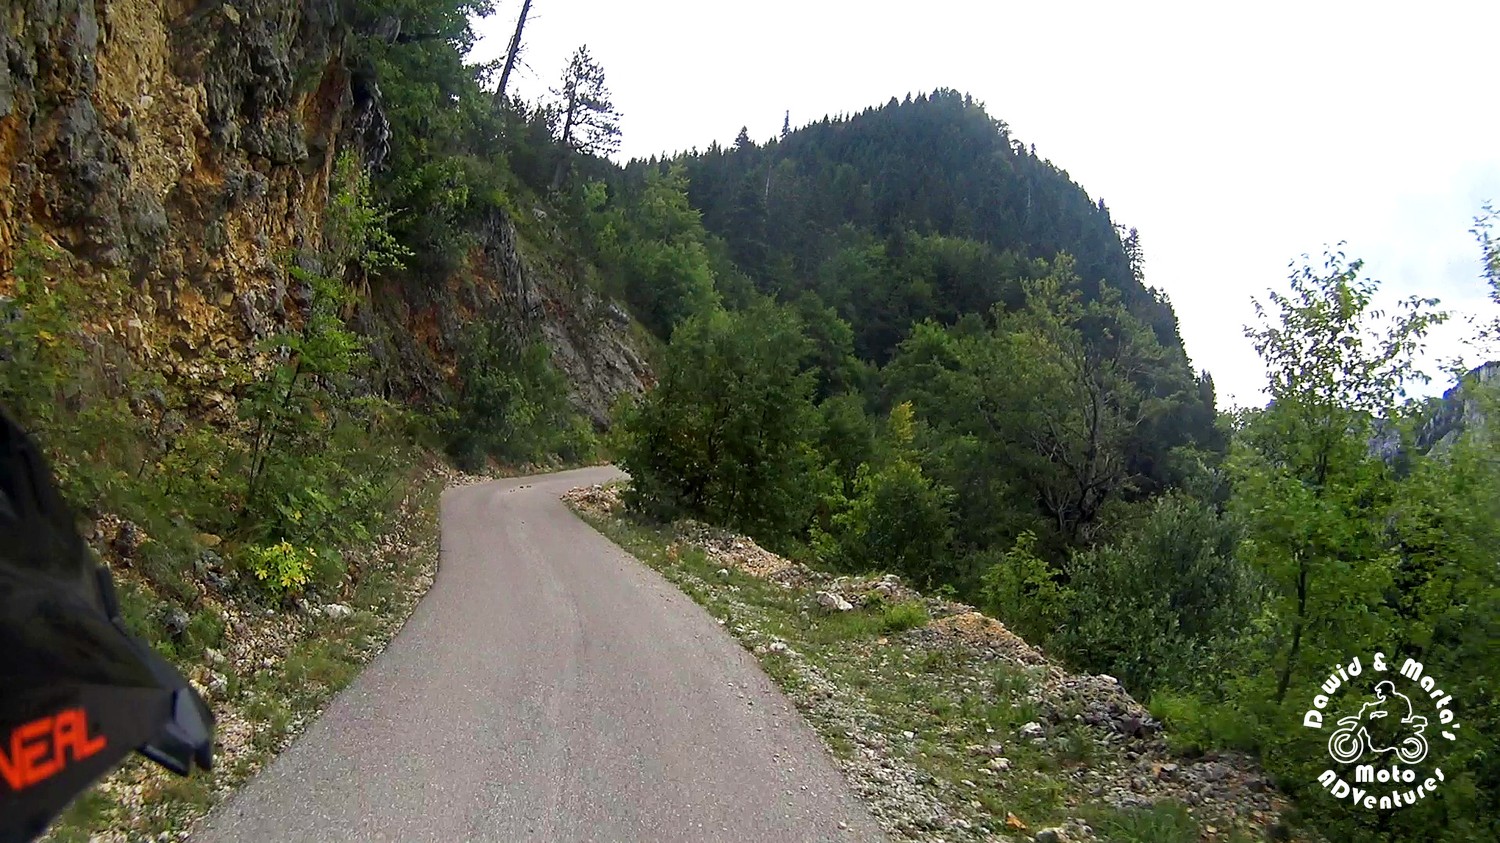 On the way from Nedajno Canyon to Zabljak via TT1 road